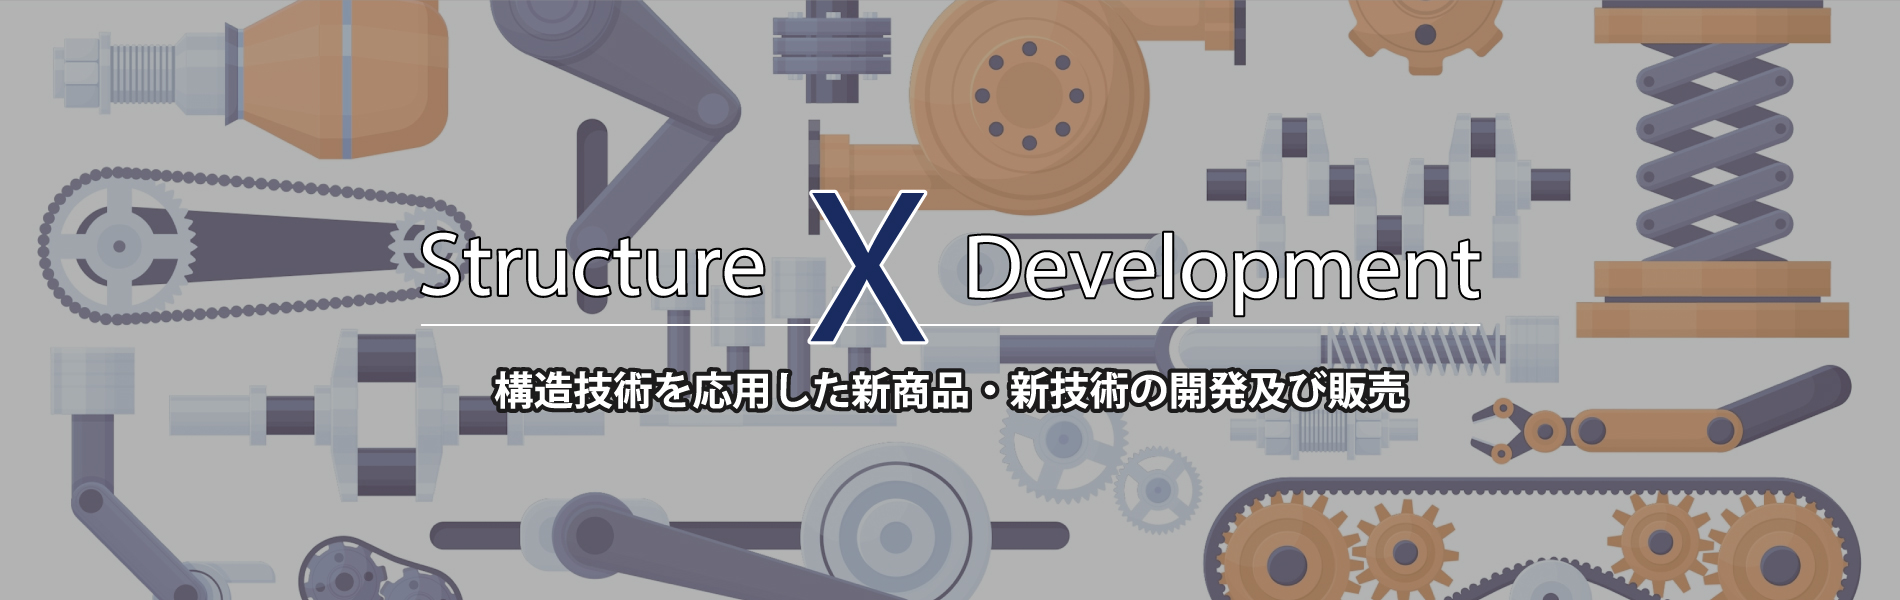 Structure X Development　構造技術を応用した新商品・新技術の開発及び販売